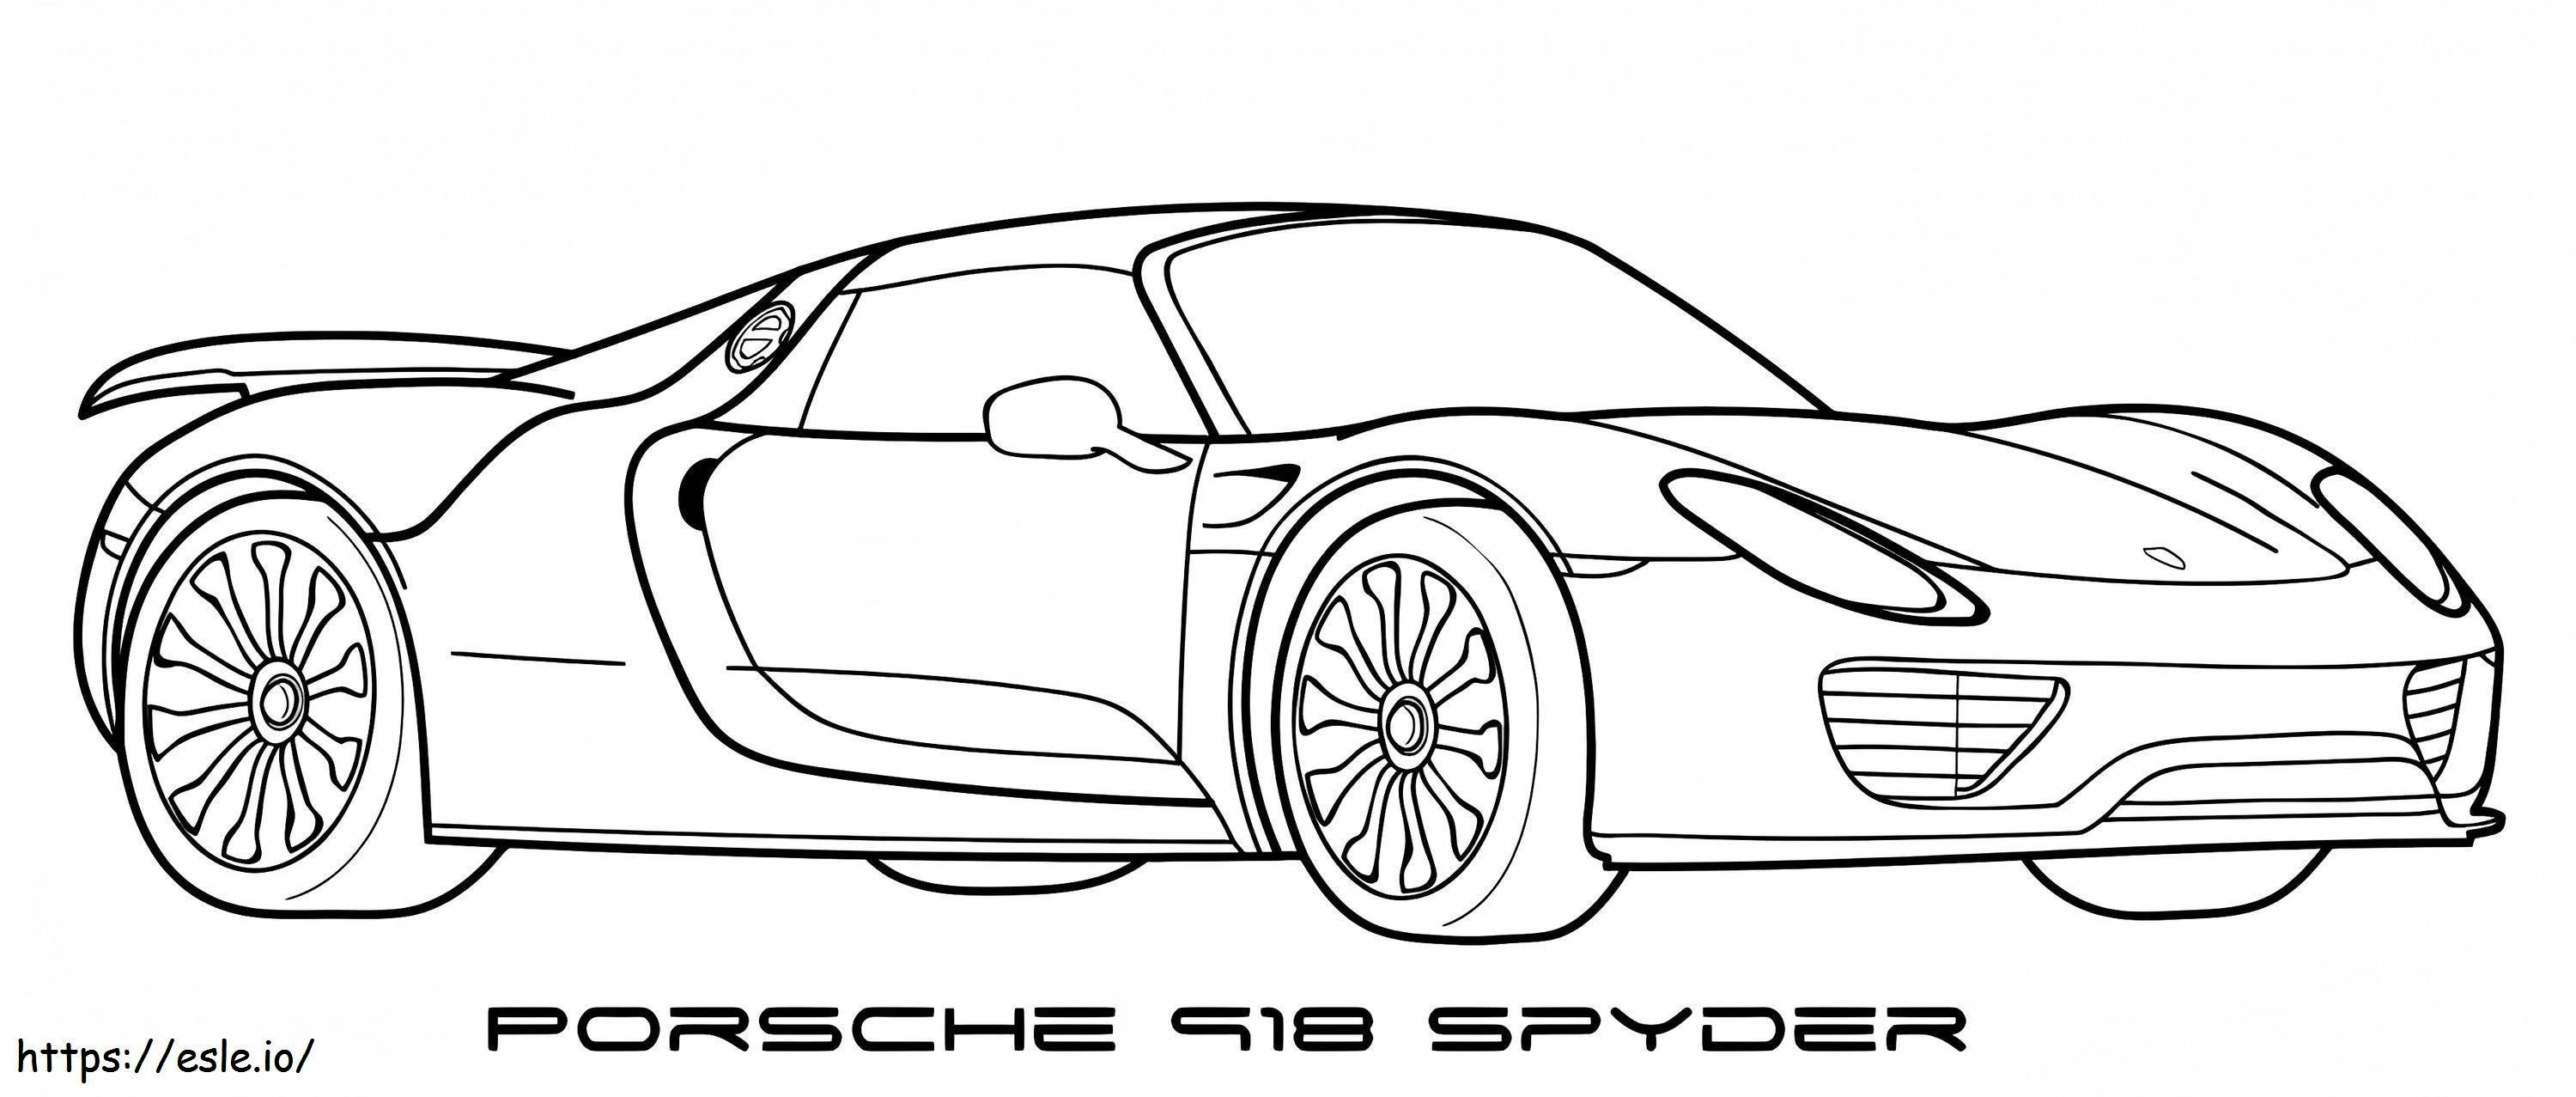 1560496770 Porsche 918 Spyder A4 coloring page